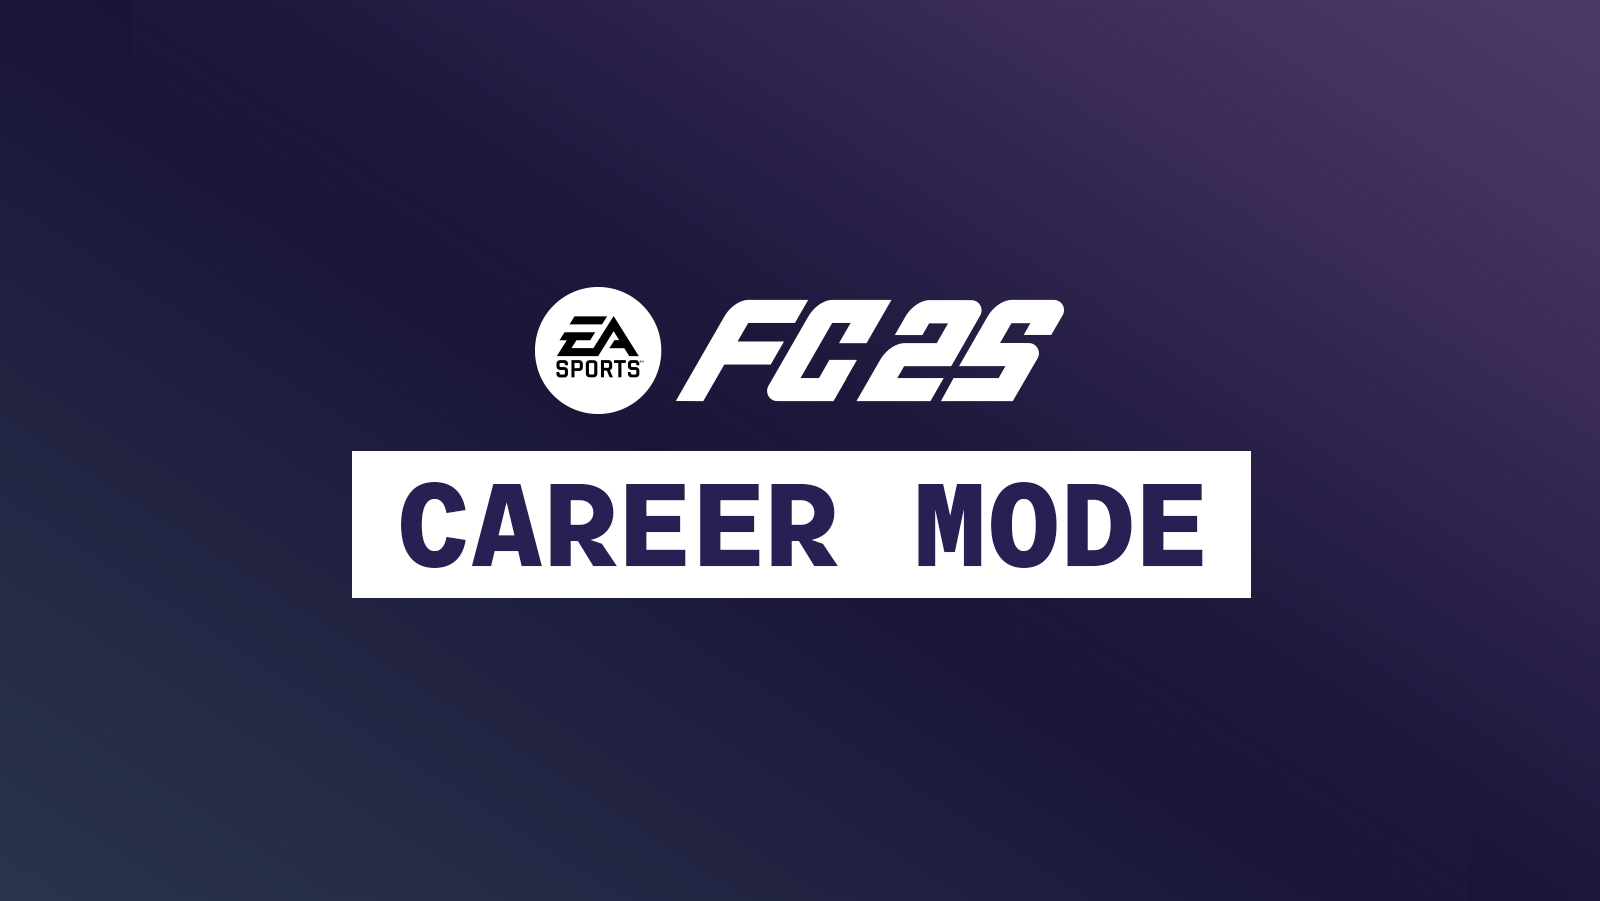 FC 25 Career Mode